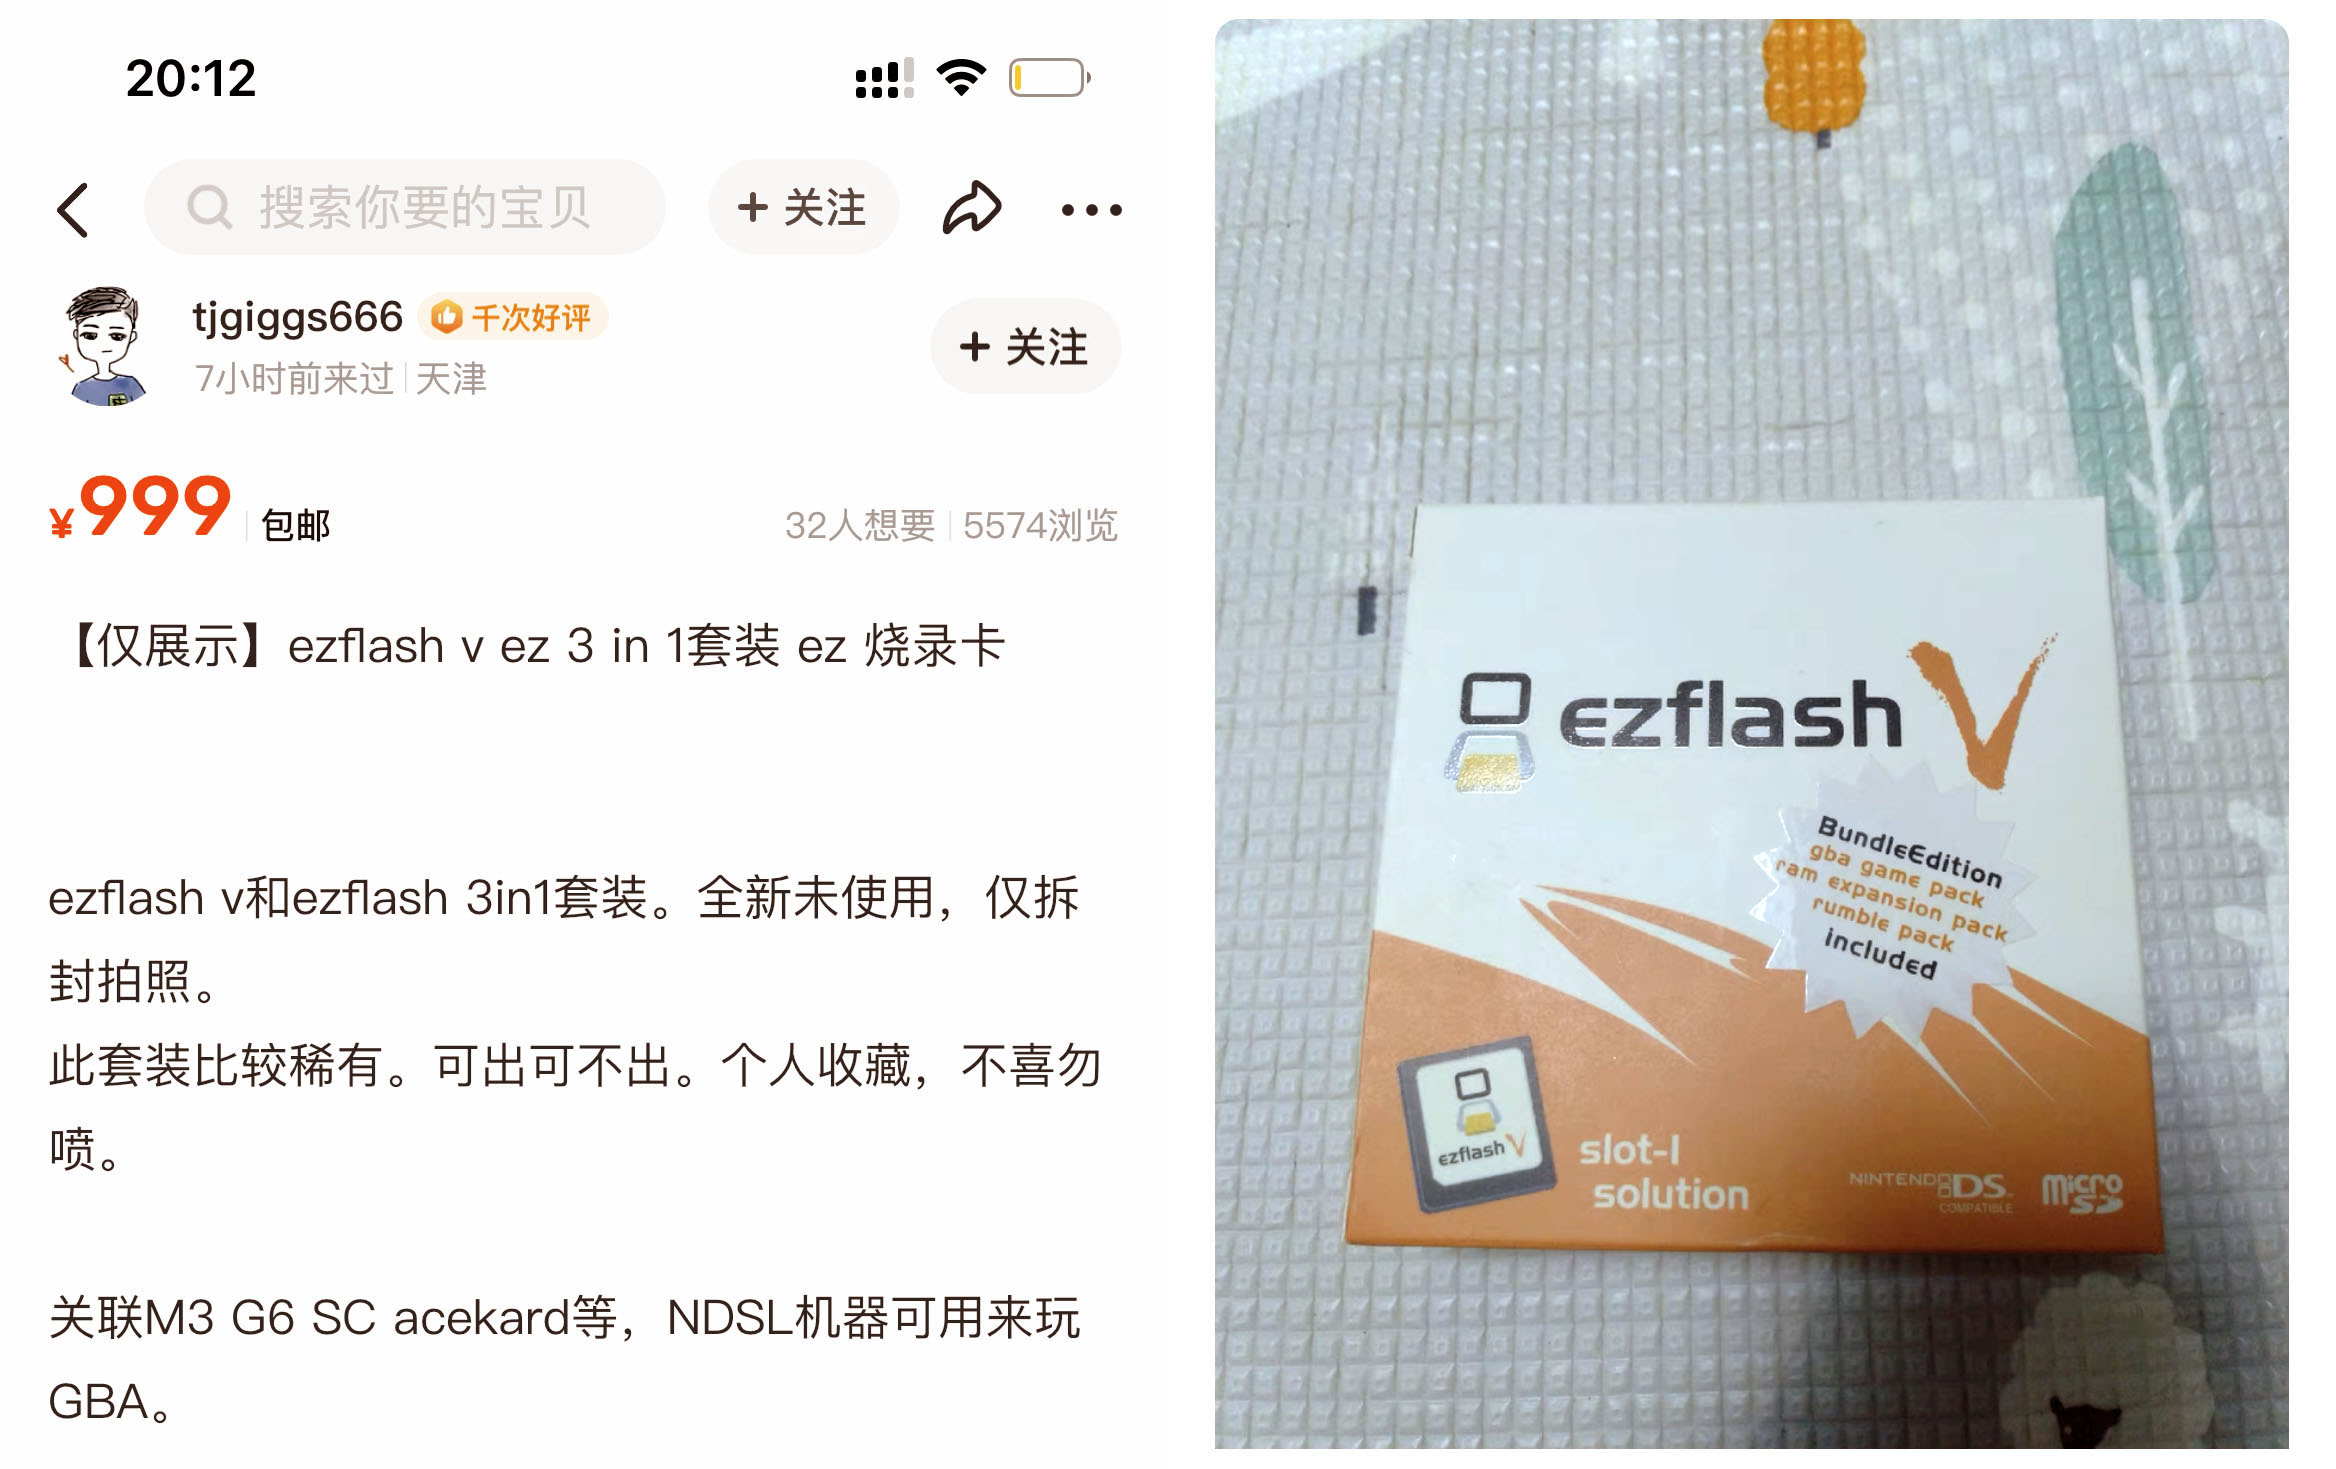 EZ-FLASH V (5) на китайском аукционе